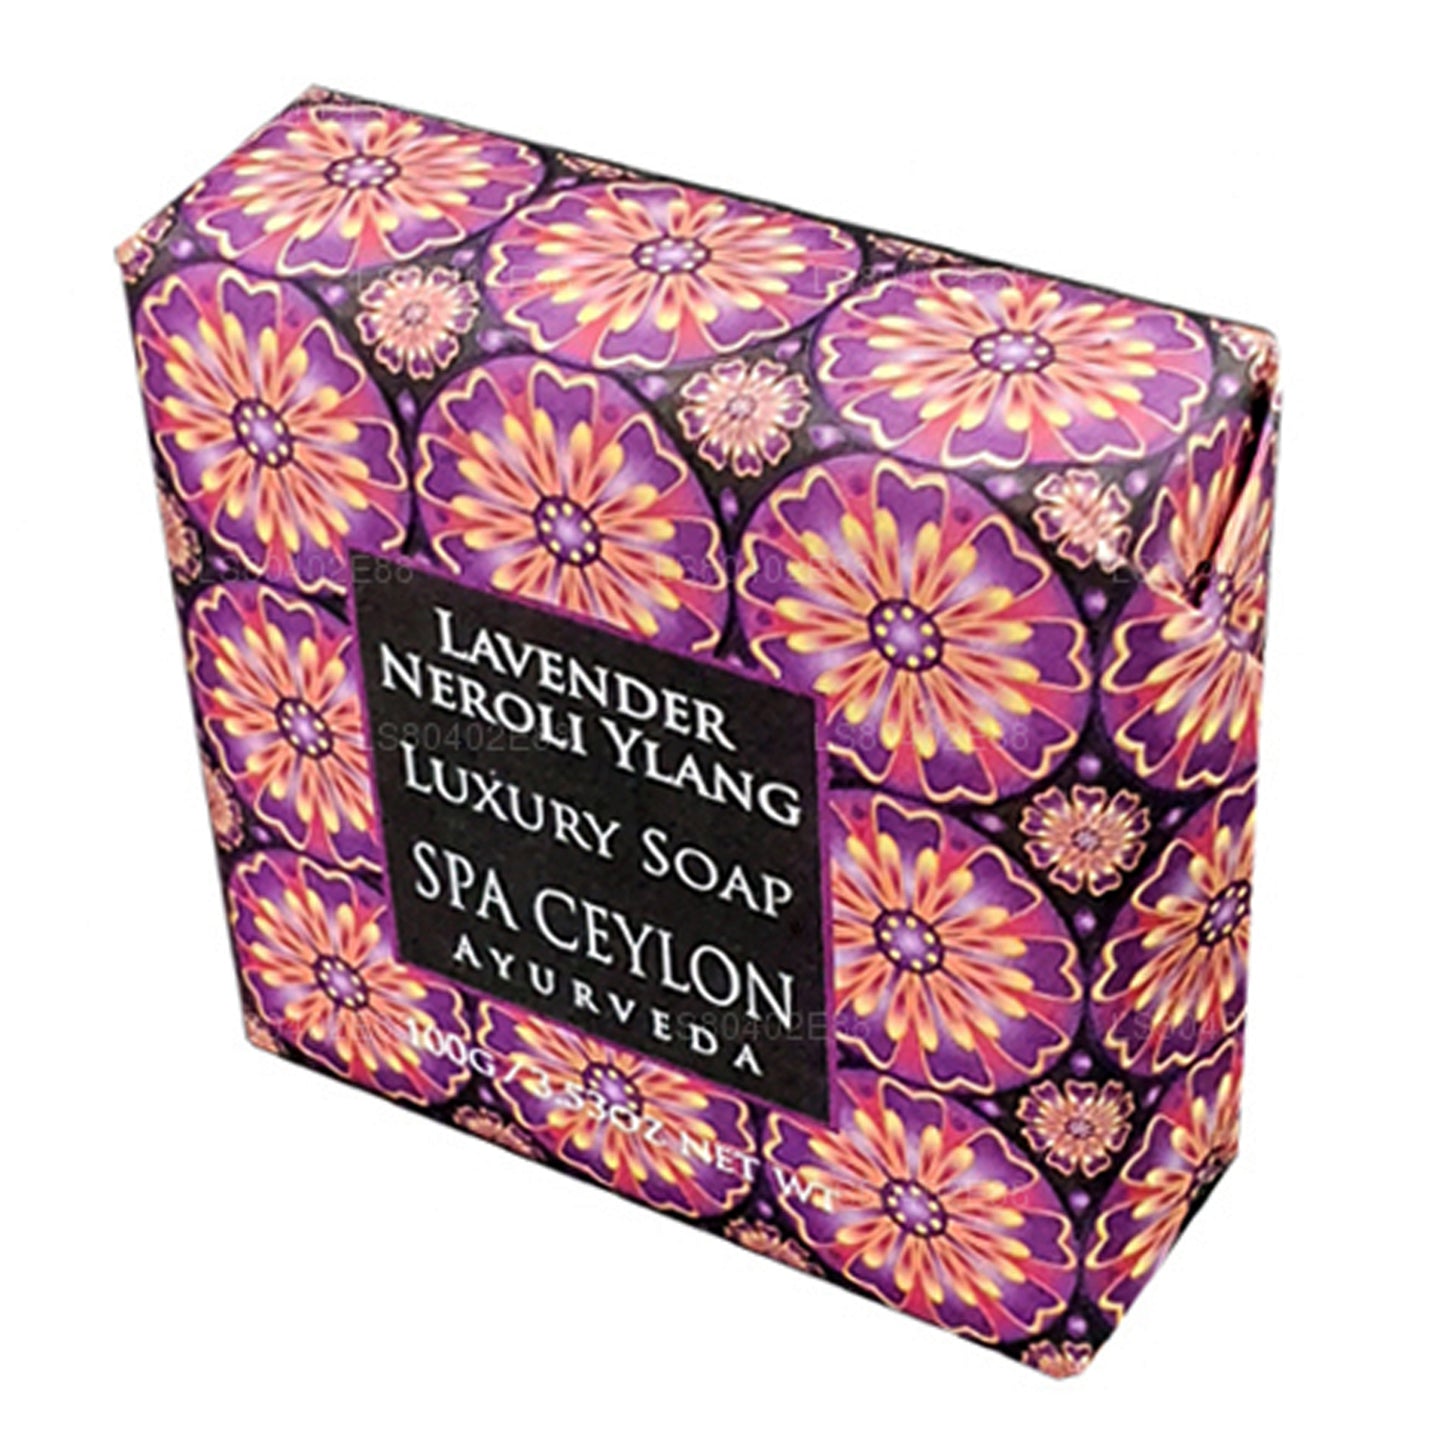 Spa Luxus-Seife Ceylon Lavender Neroli Ylang, 100 g